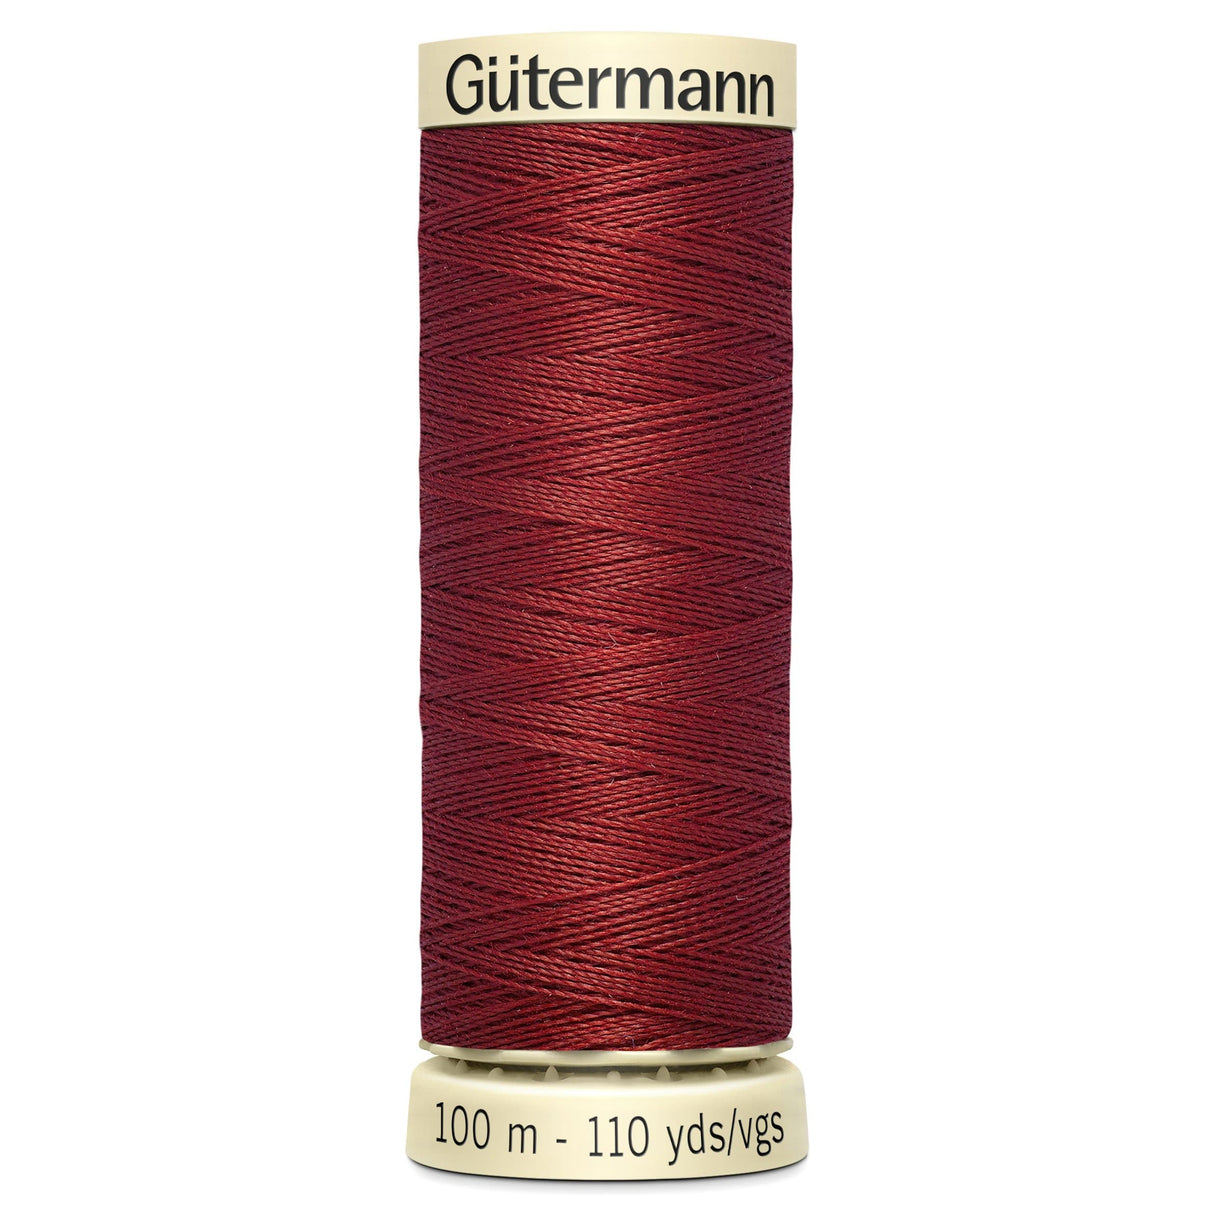 Groves Haberdashery 221 Gutermann Thread Sewing Cotton 100 m Black to Pink